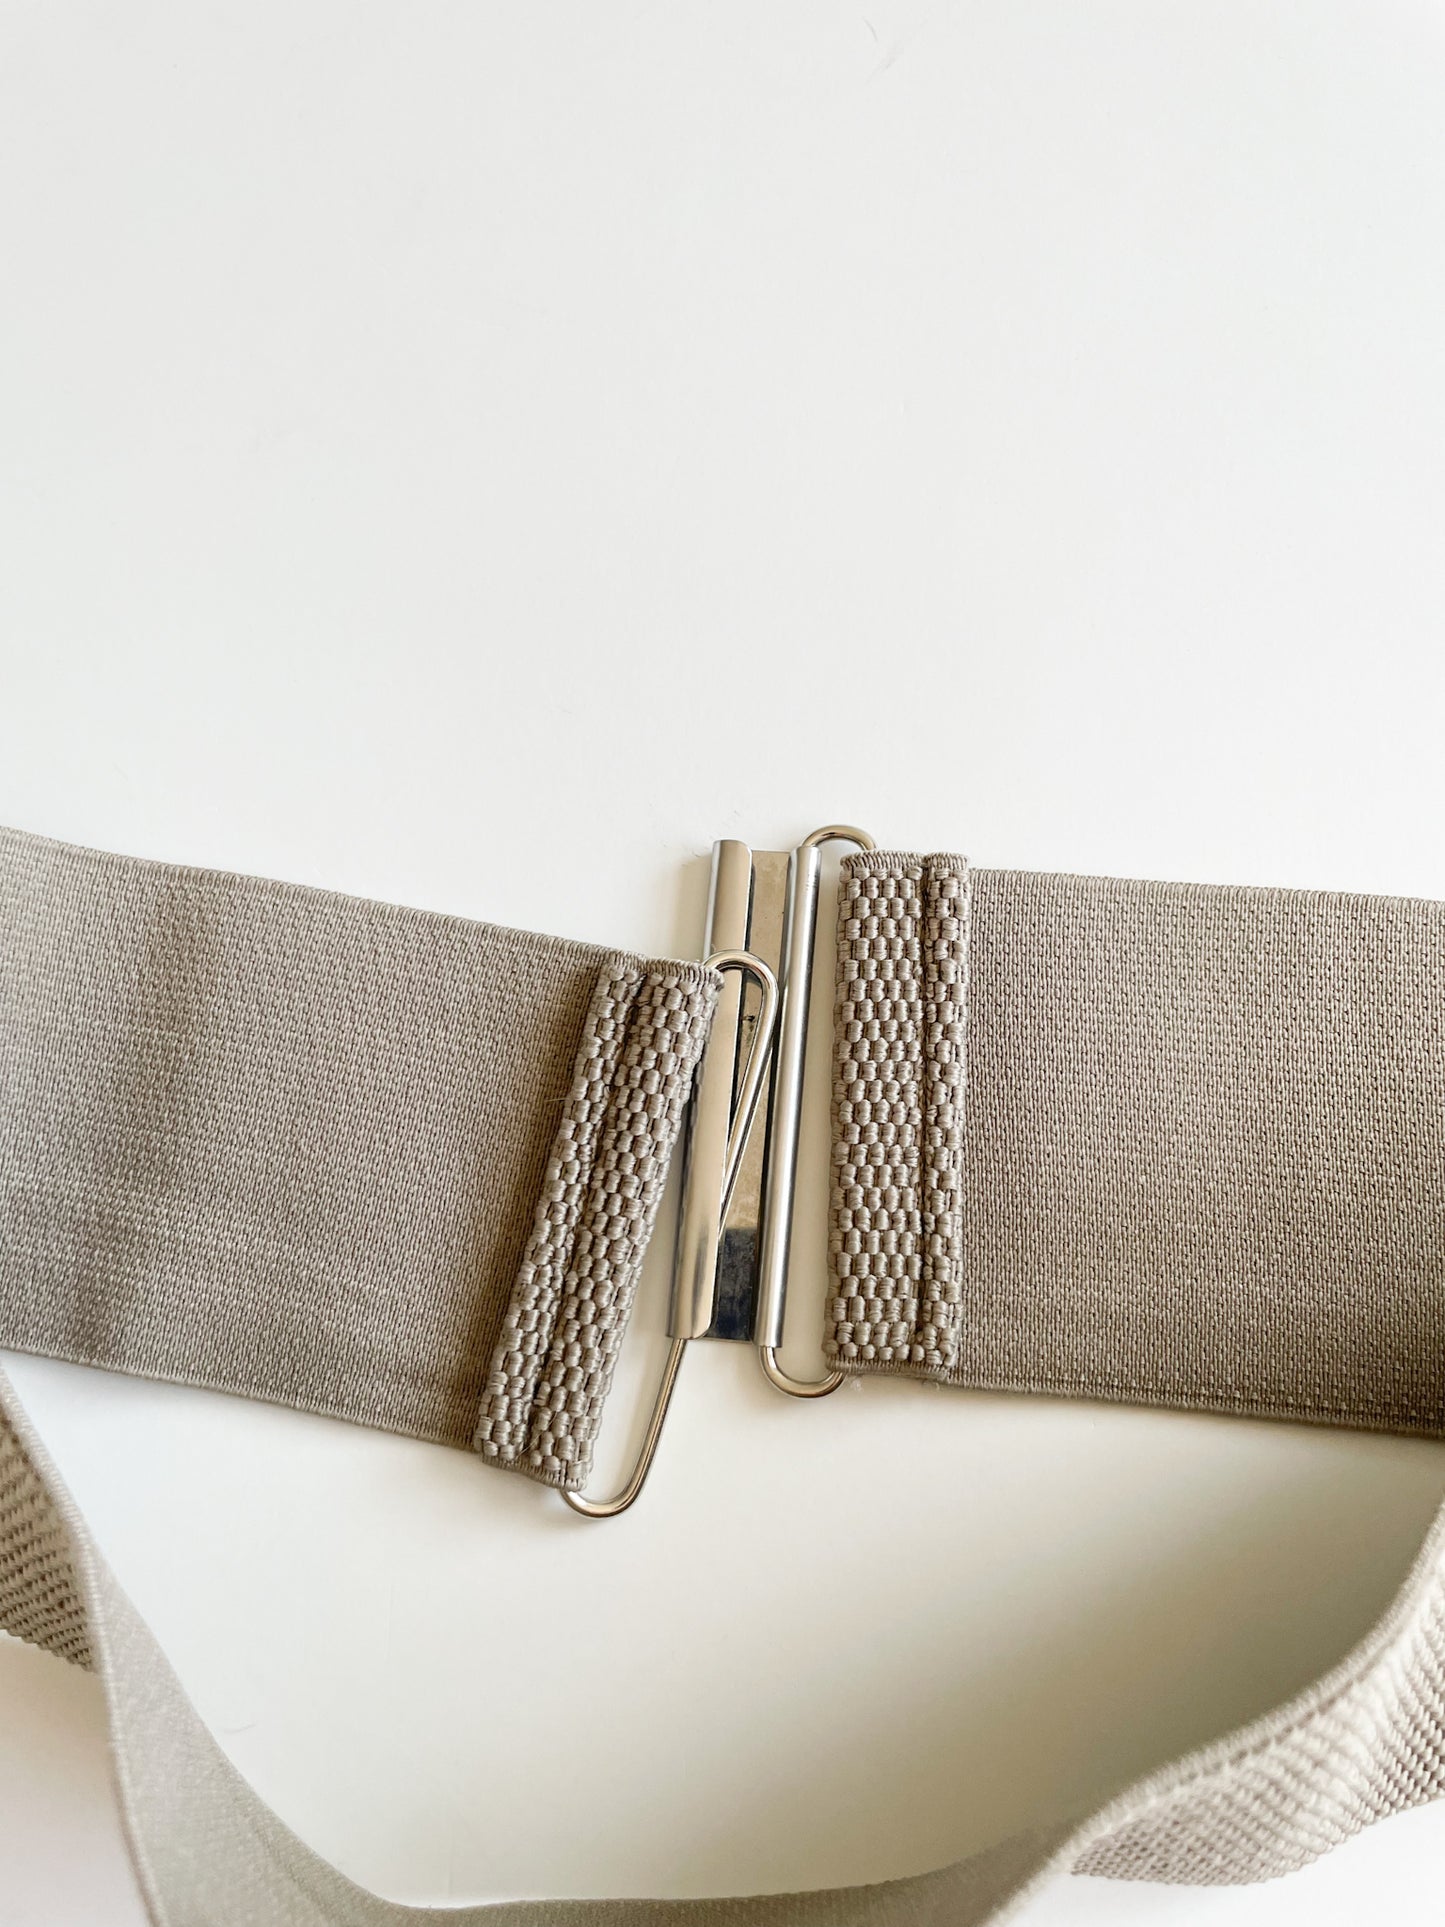 Grey Taupe Stretch Elastic Waist Belt - L/XL (34-52" waist)